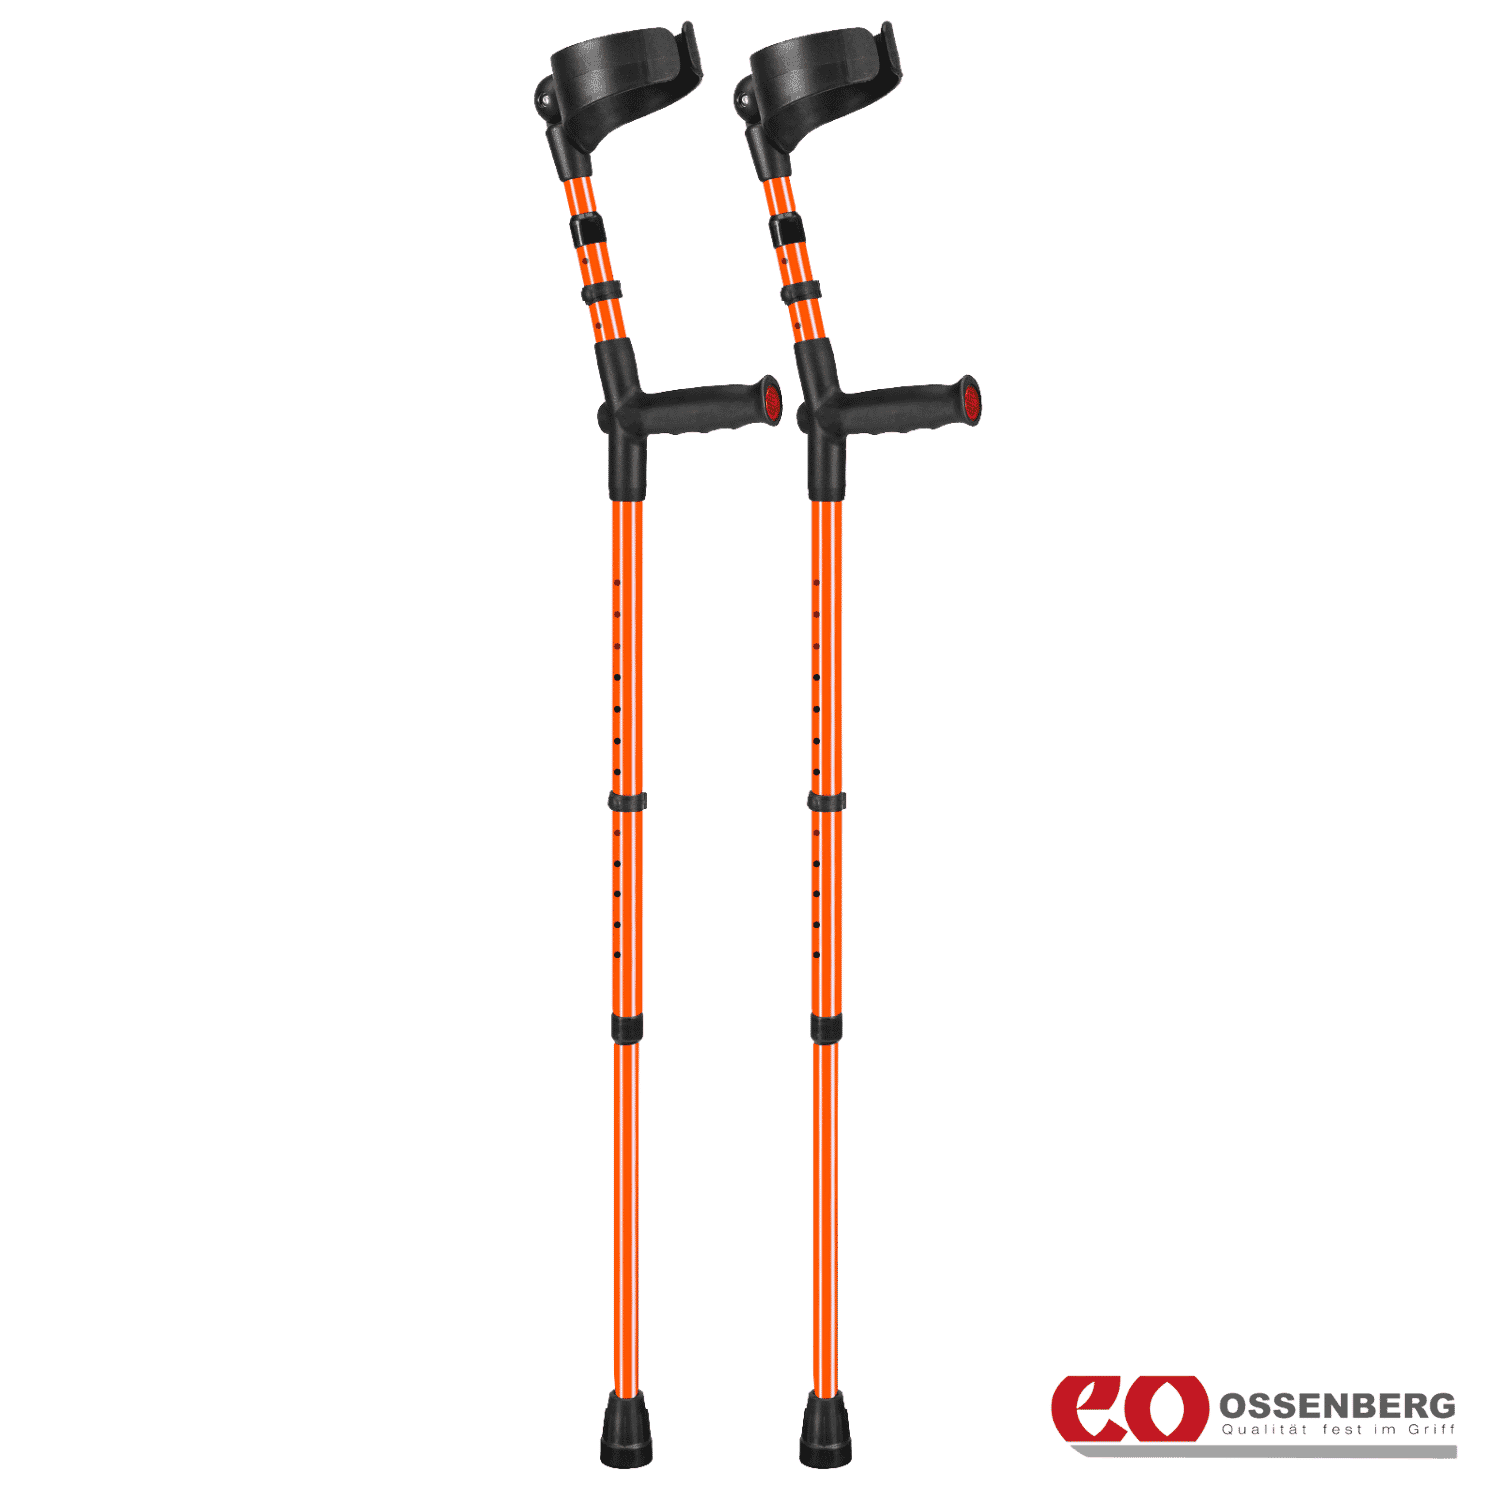 View Ossenberg Soft Grip Double Adjustable Crutches Orange Pair information